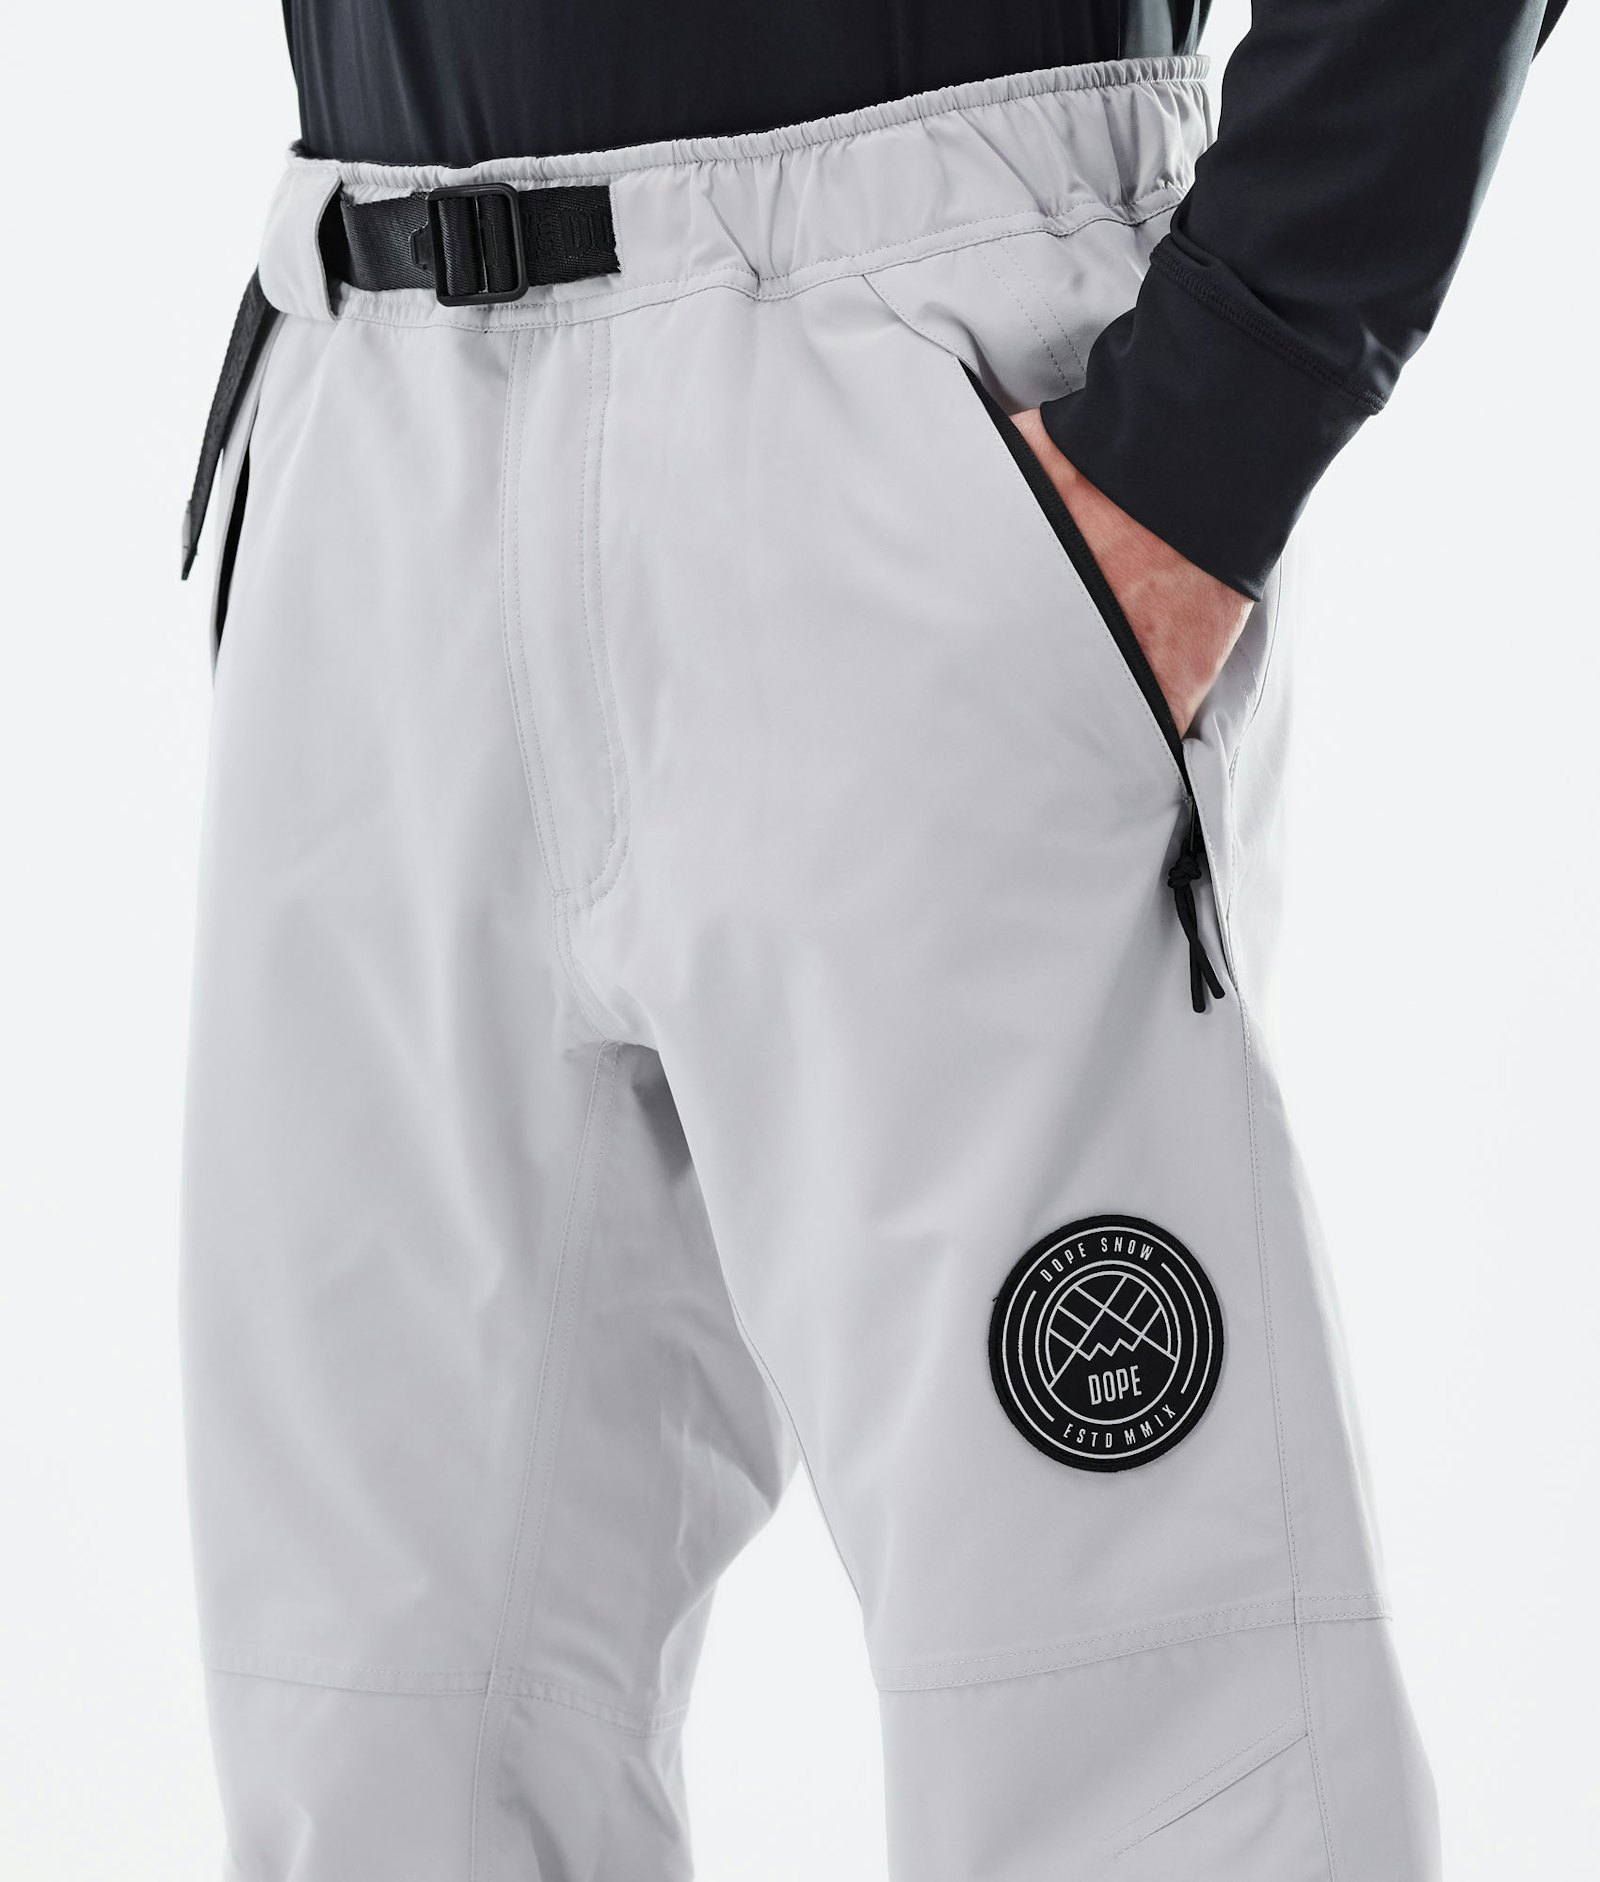 Blizzard LE Snowboard Pants Men Limited Edition Stripe Light Grey